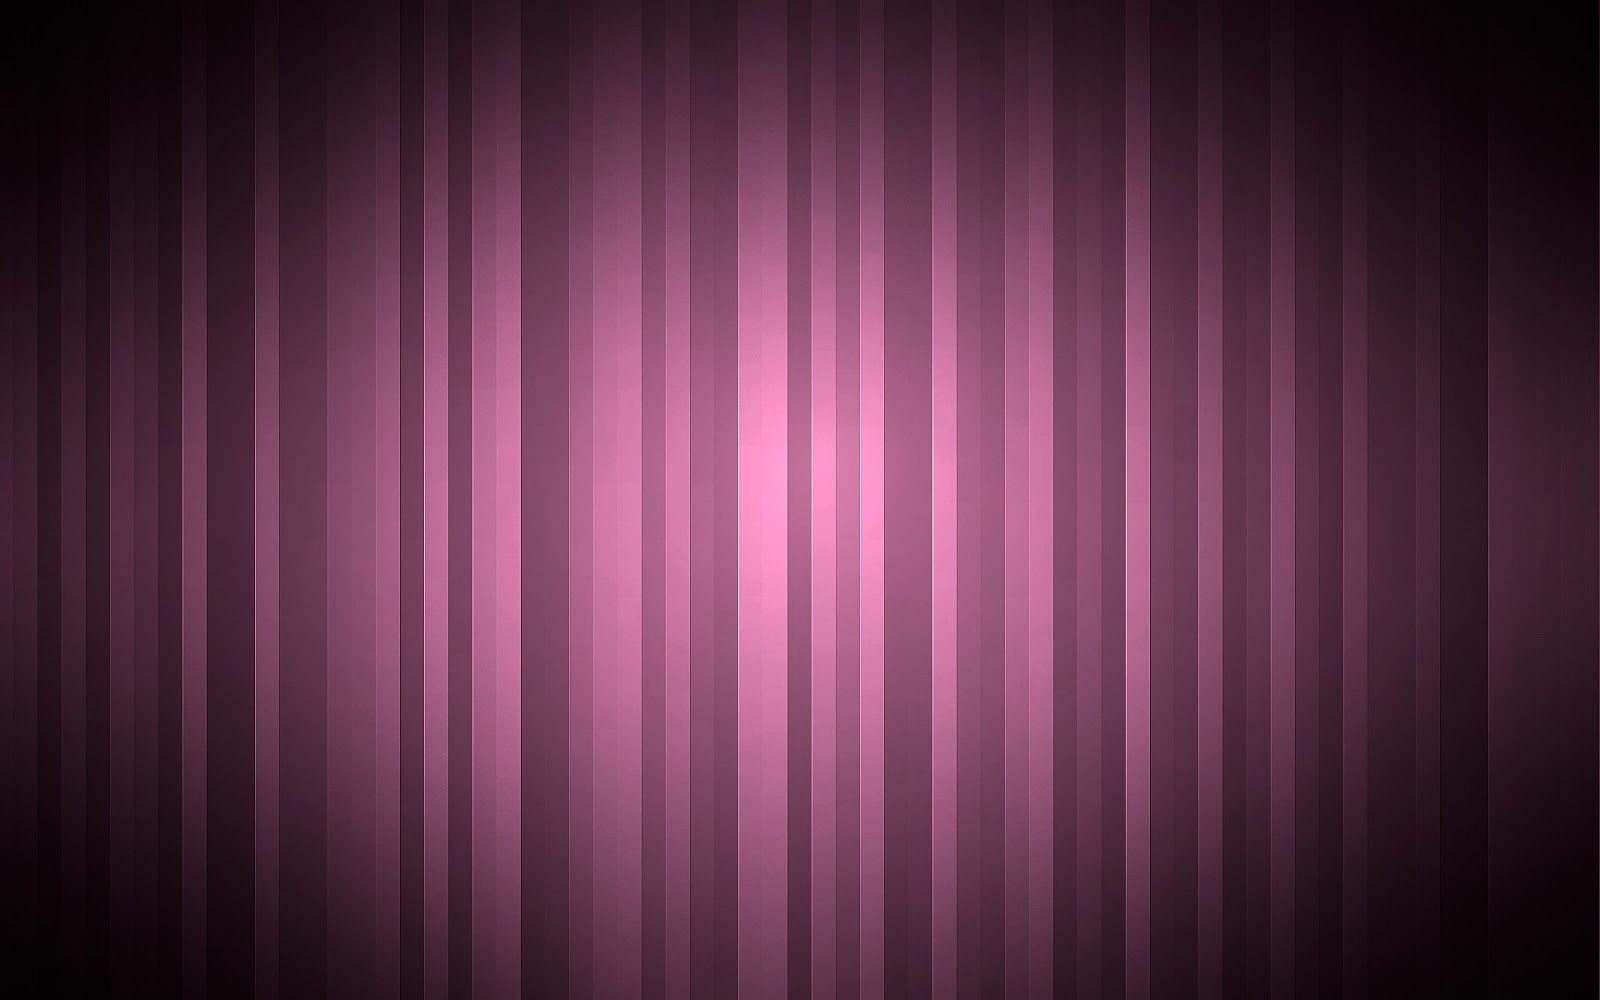 ... yndesign.blogspot.com/2013/08/stripe-wallpaper-yellow-pink-stripe.html